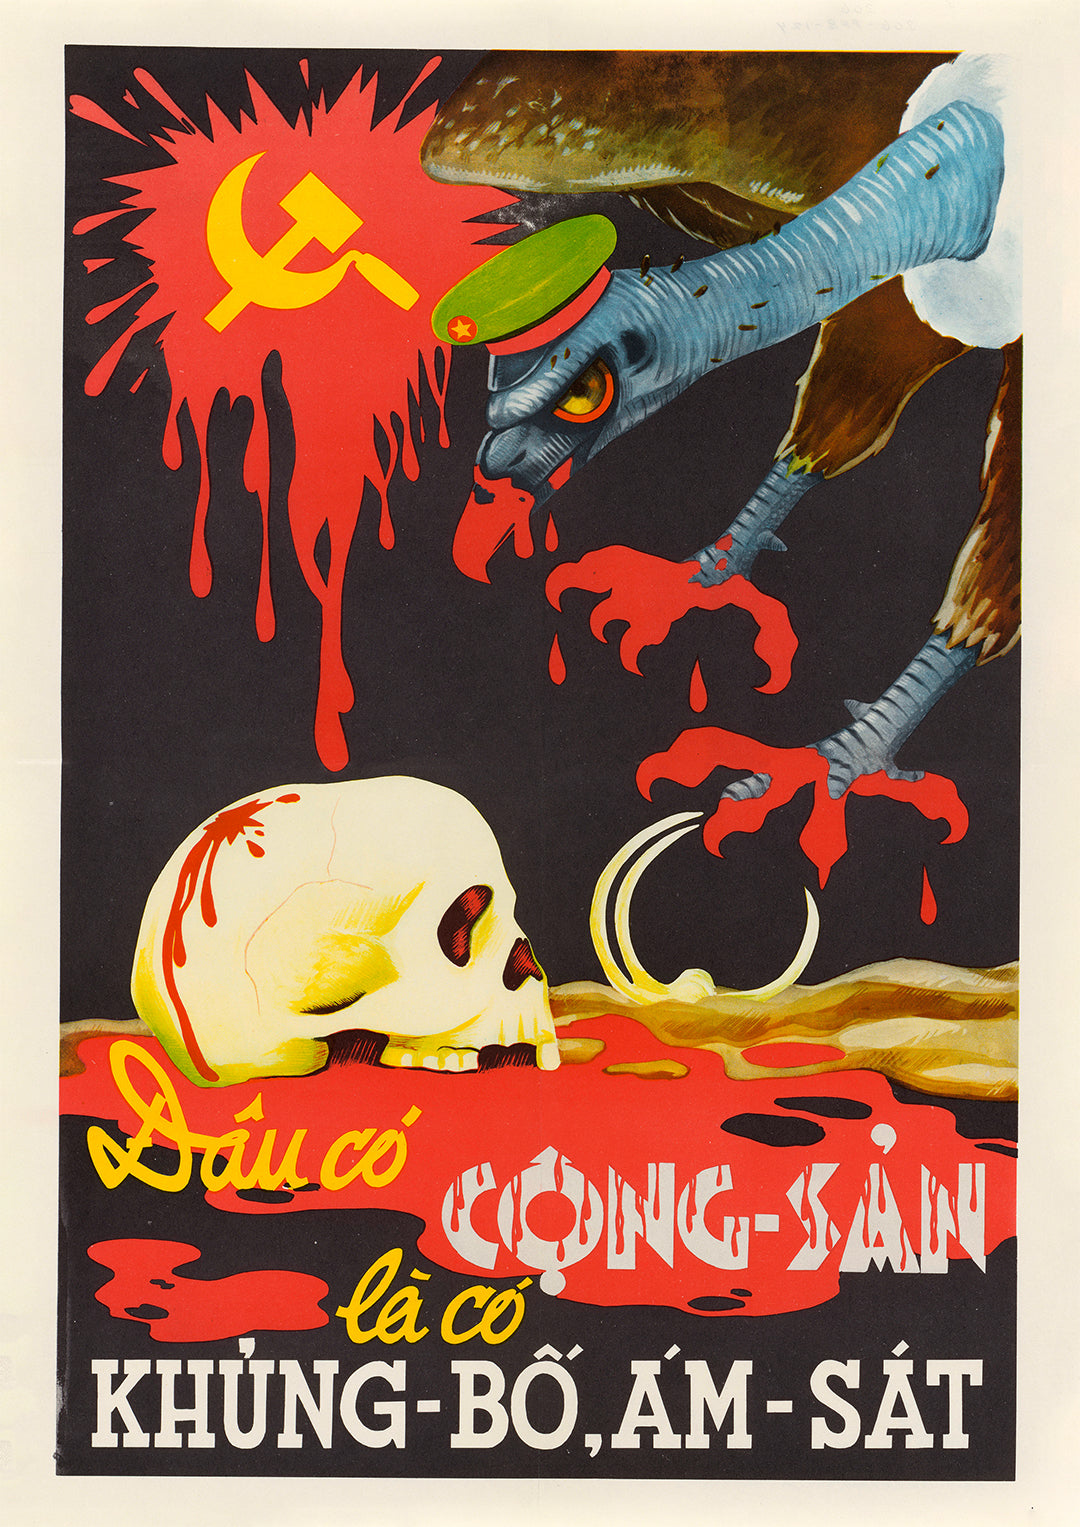 Communism Means Terrorism – US poster from Vietnam